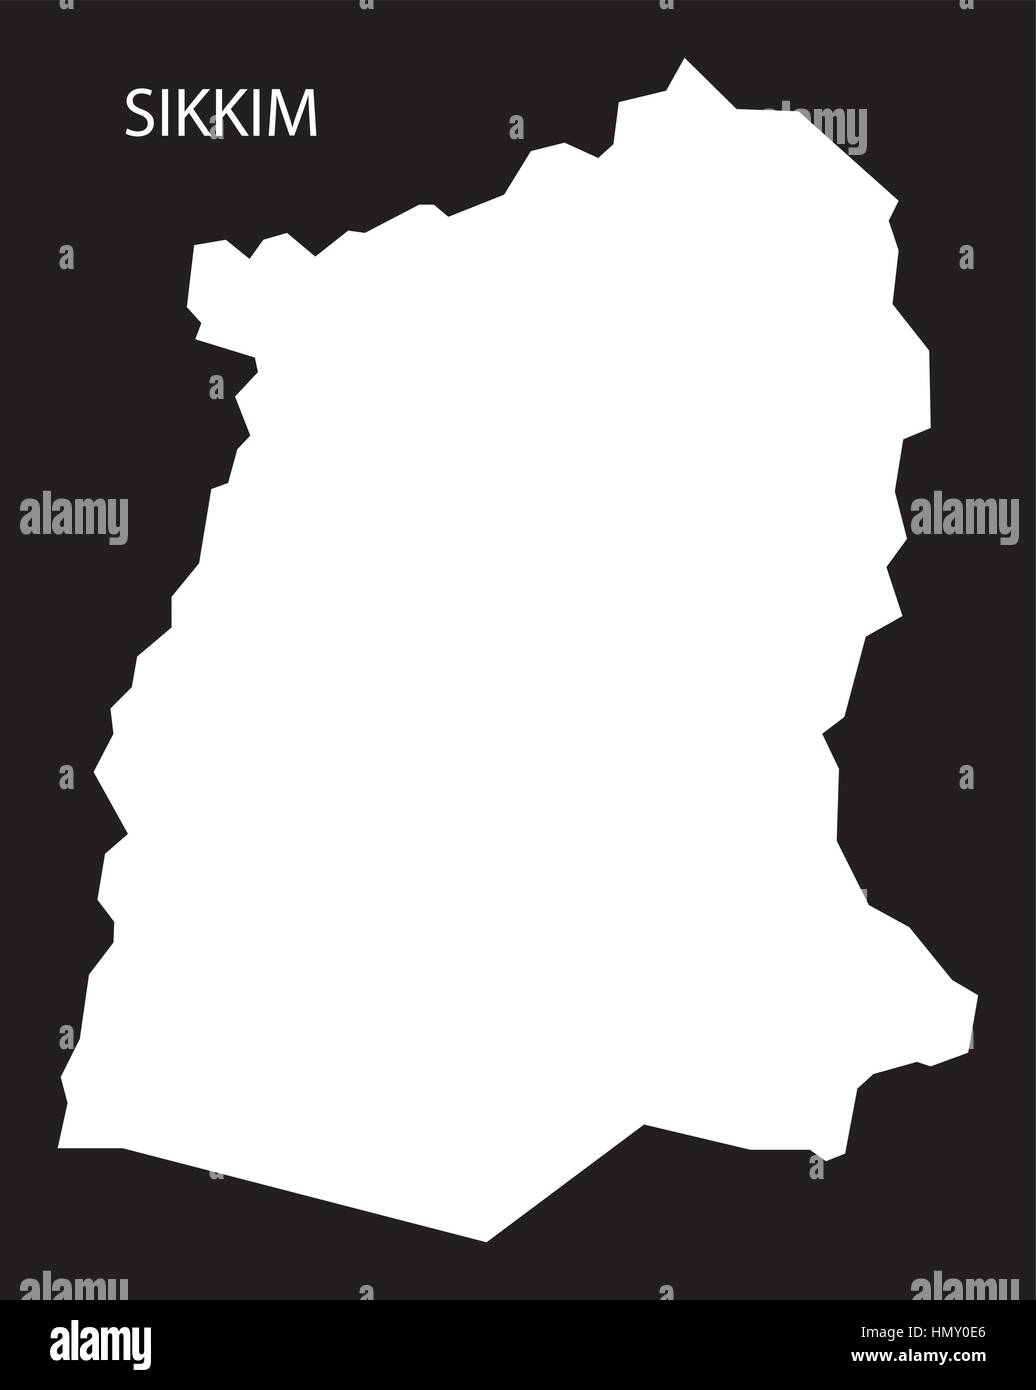 Sikkim Indien Karte schwarz invertiert silhouette Stock Vektor